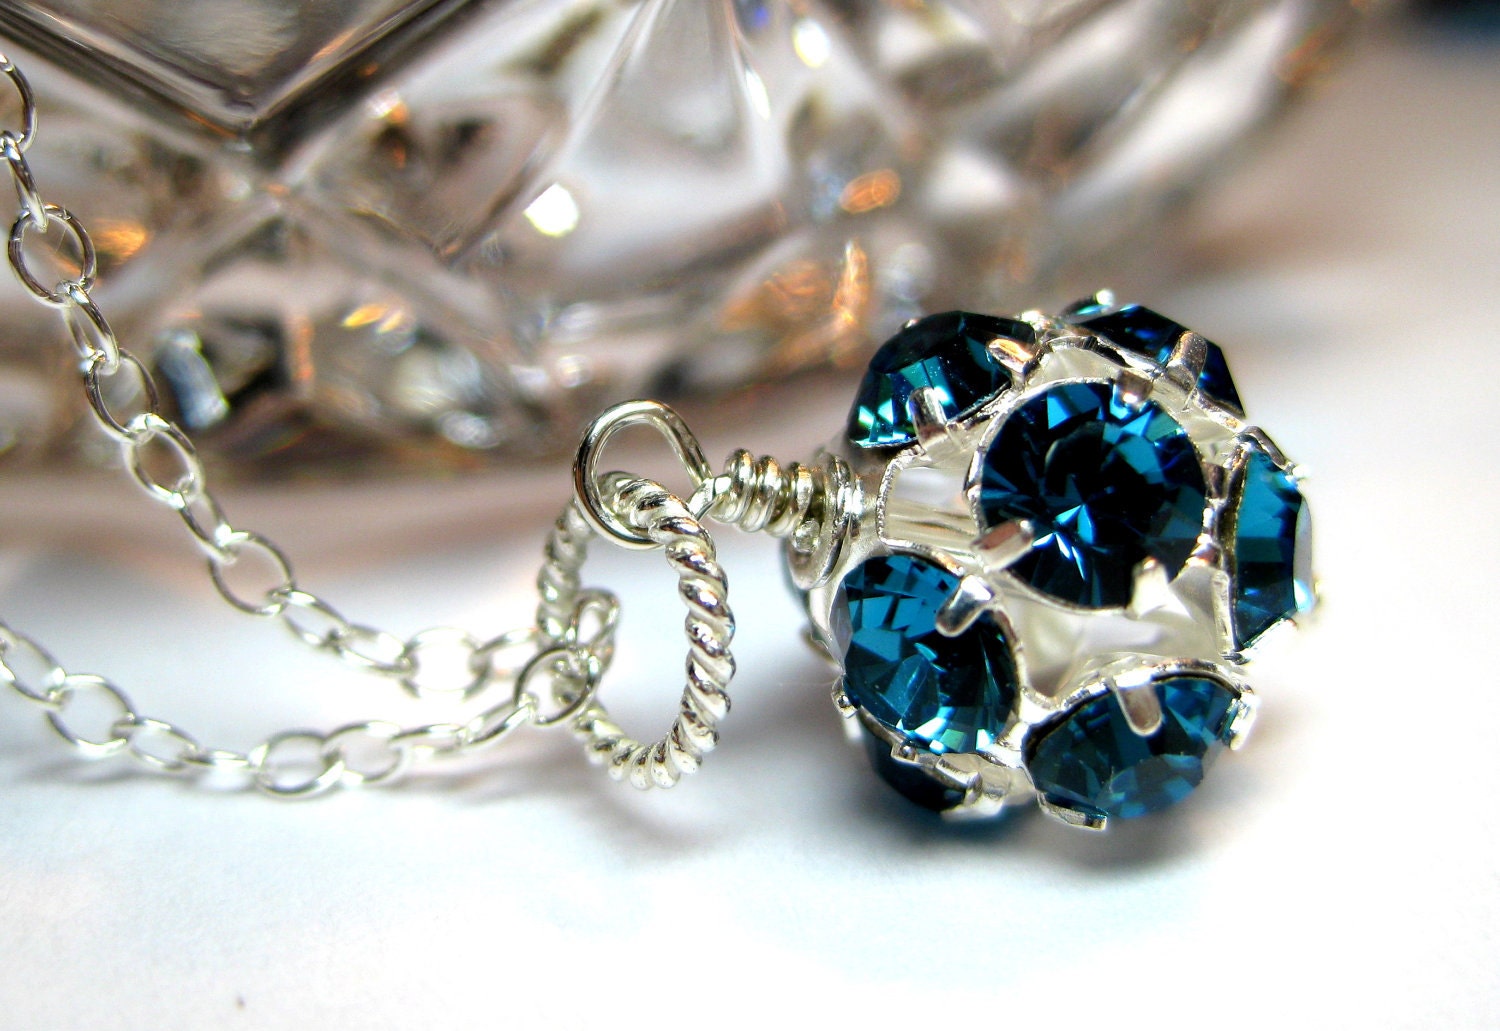 Swarovski necklace, Teal green, Sterling silver, Swarovski crystals rhinestones, Round crystal ball, Handmade jewelry - JewelrybyDorothy